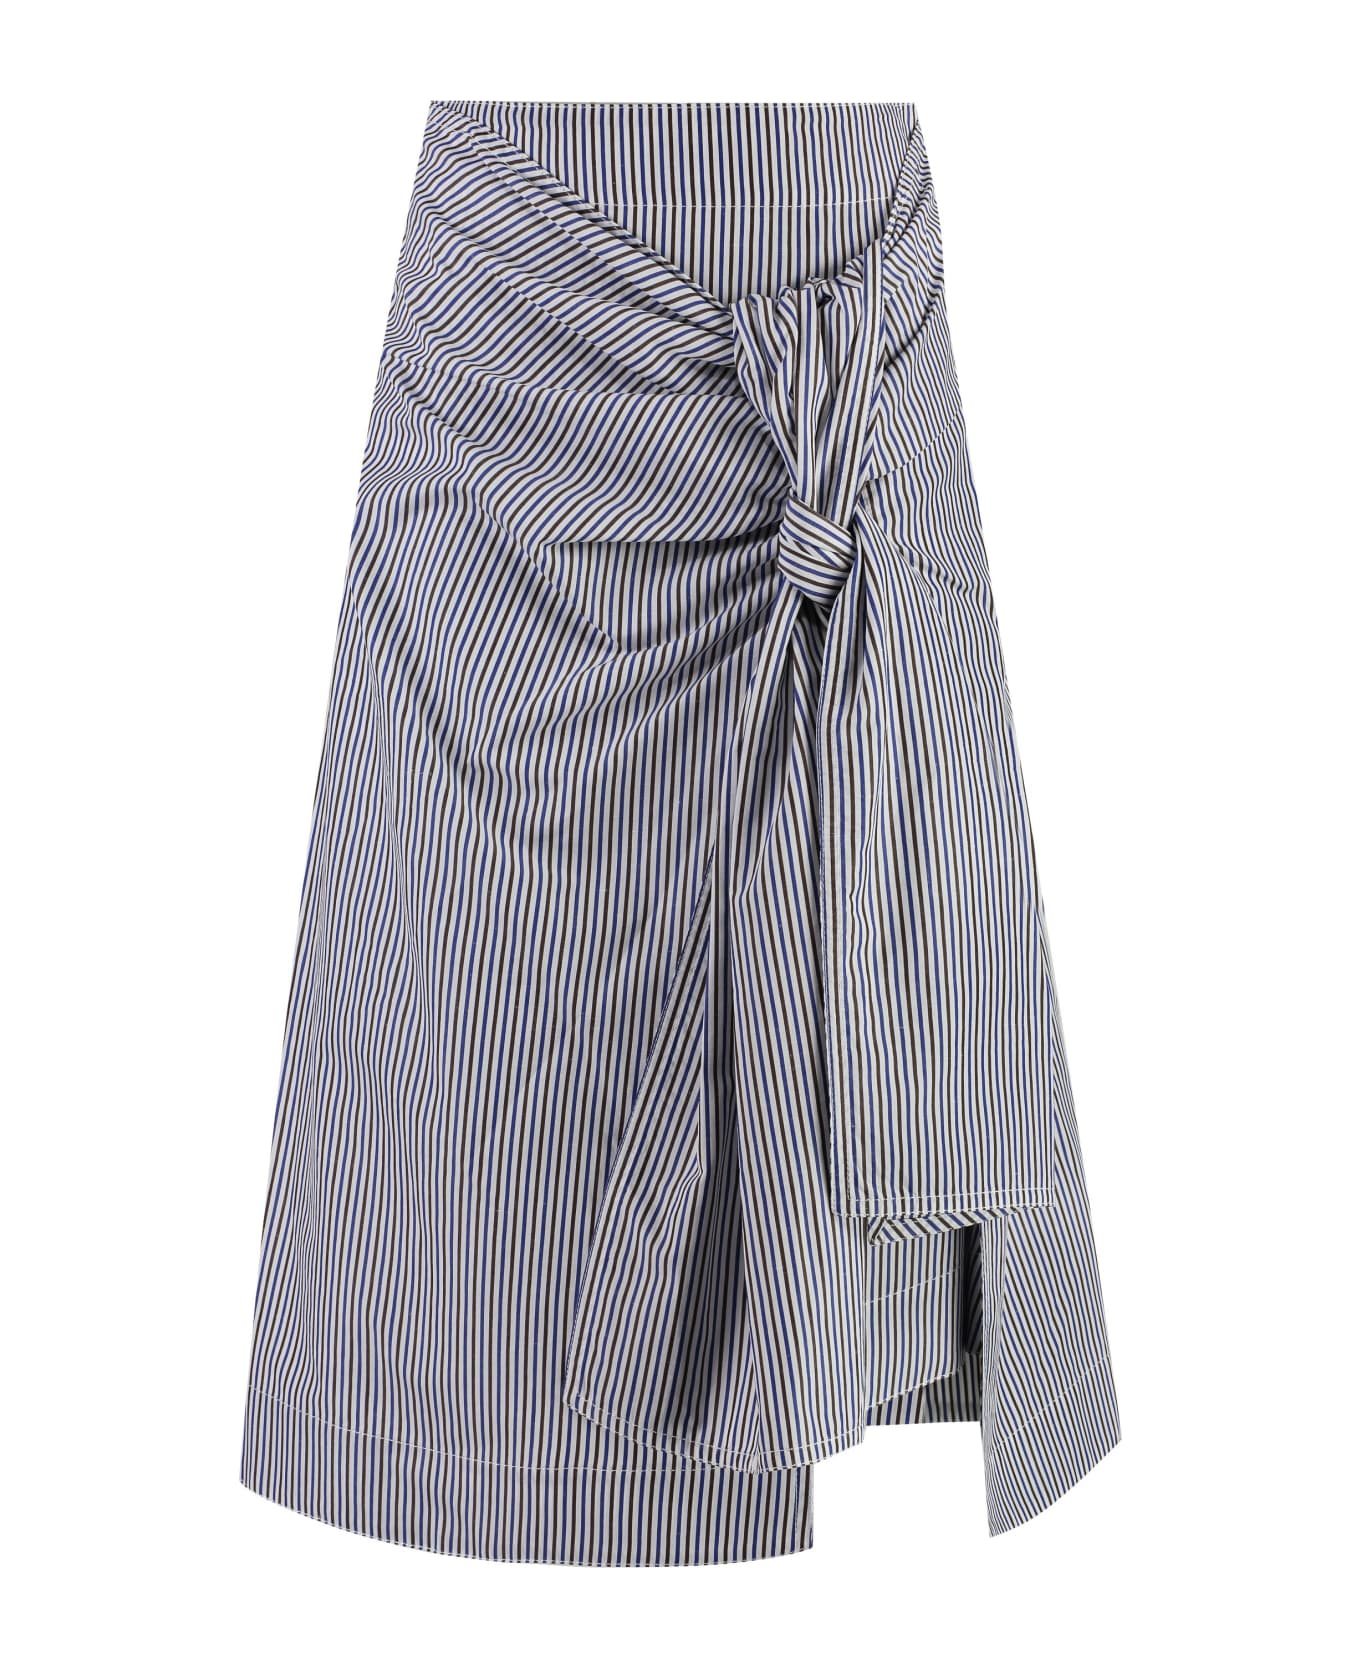 Bottega Veneta Cotton And Linen Skirt | italist